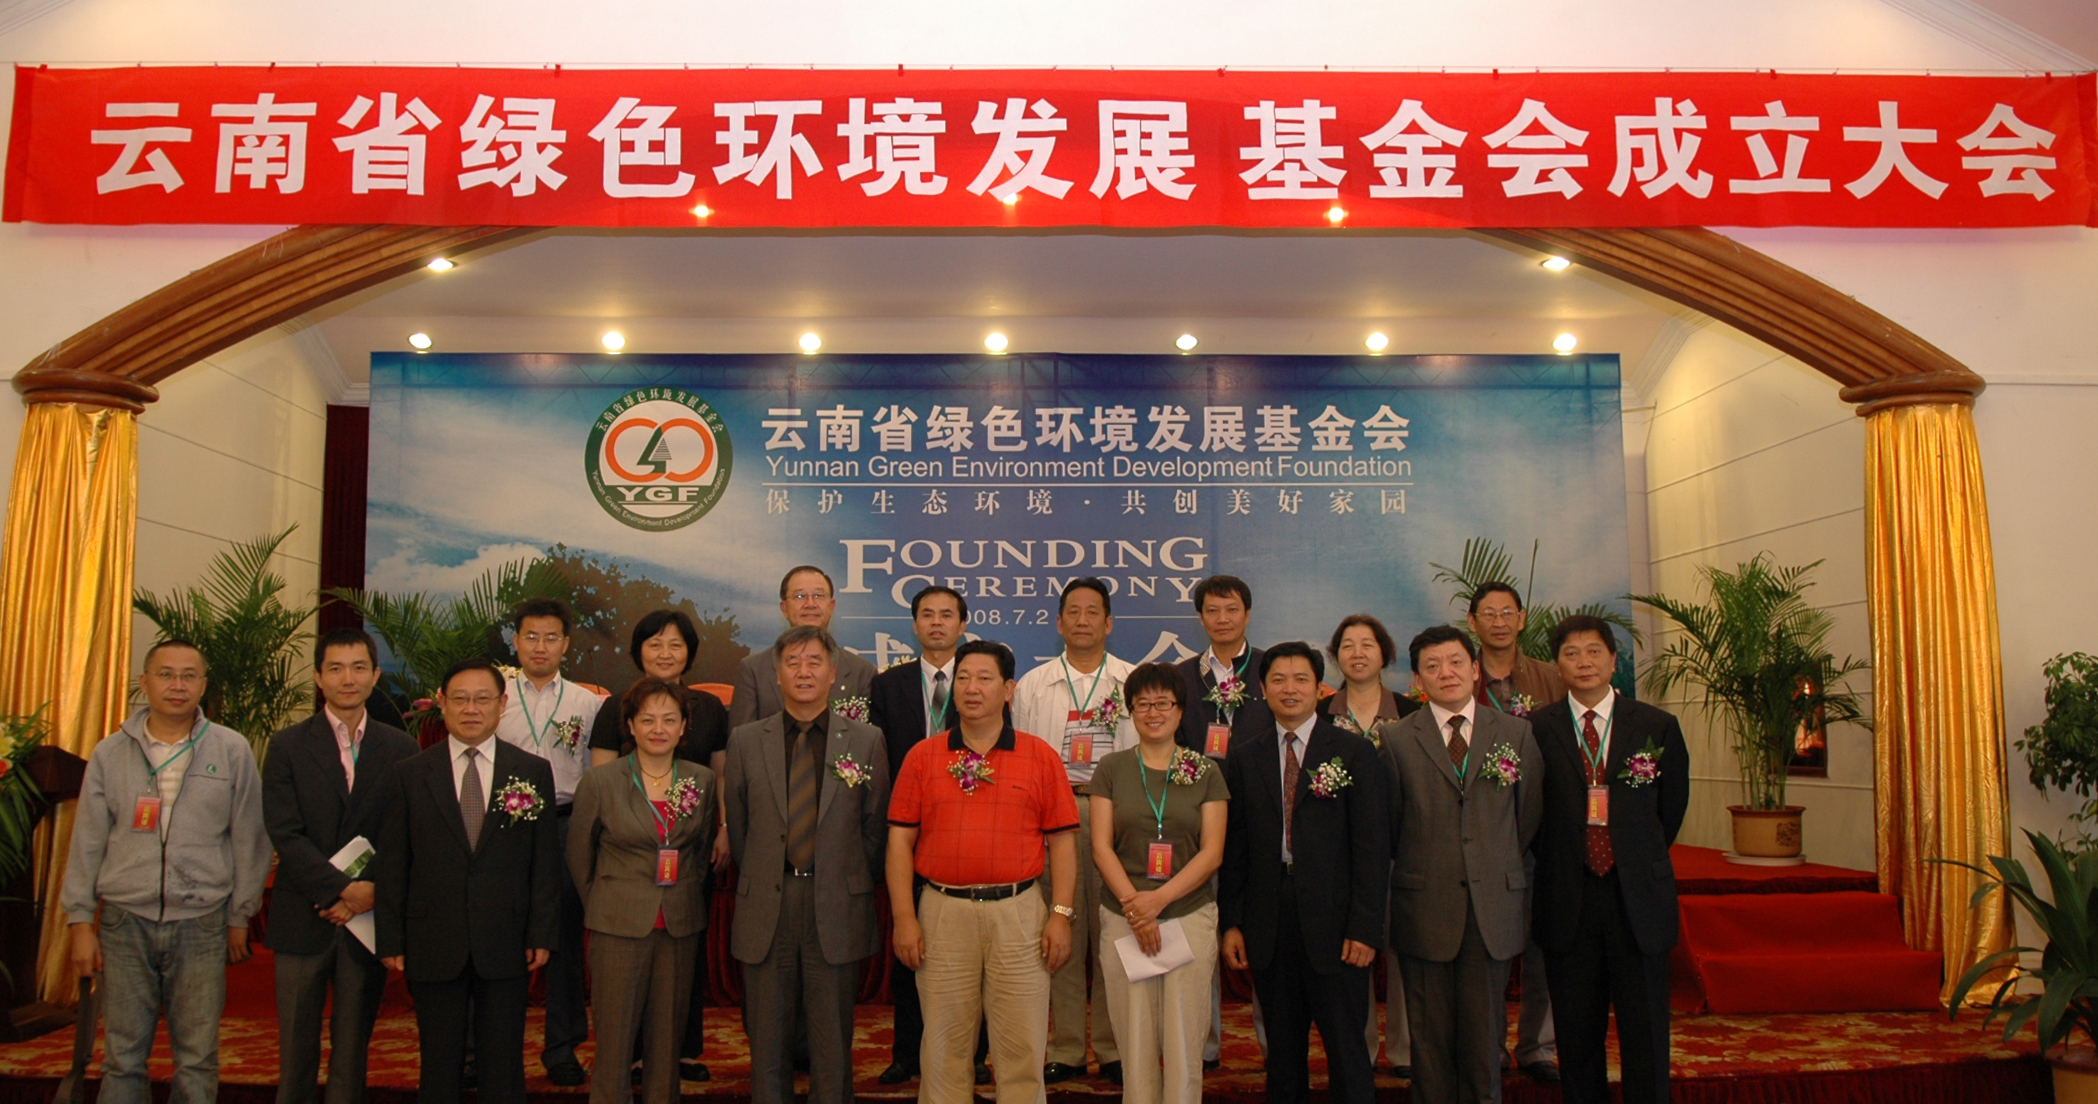 founding ceremany of Yunnan Green Environment Development Foundation (YGF）